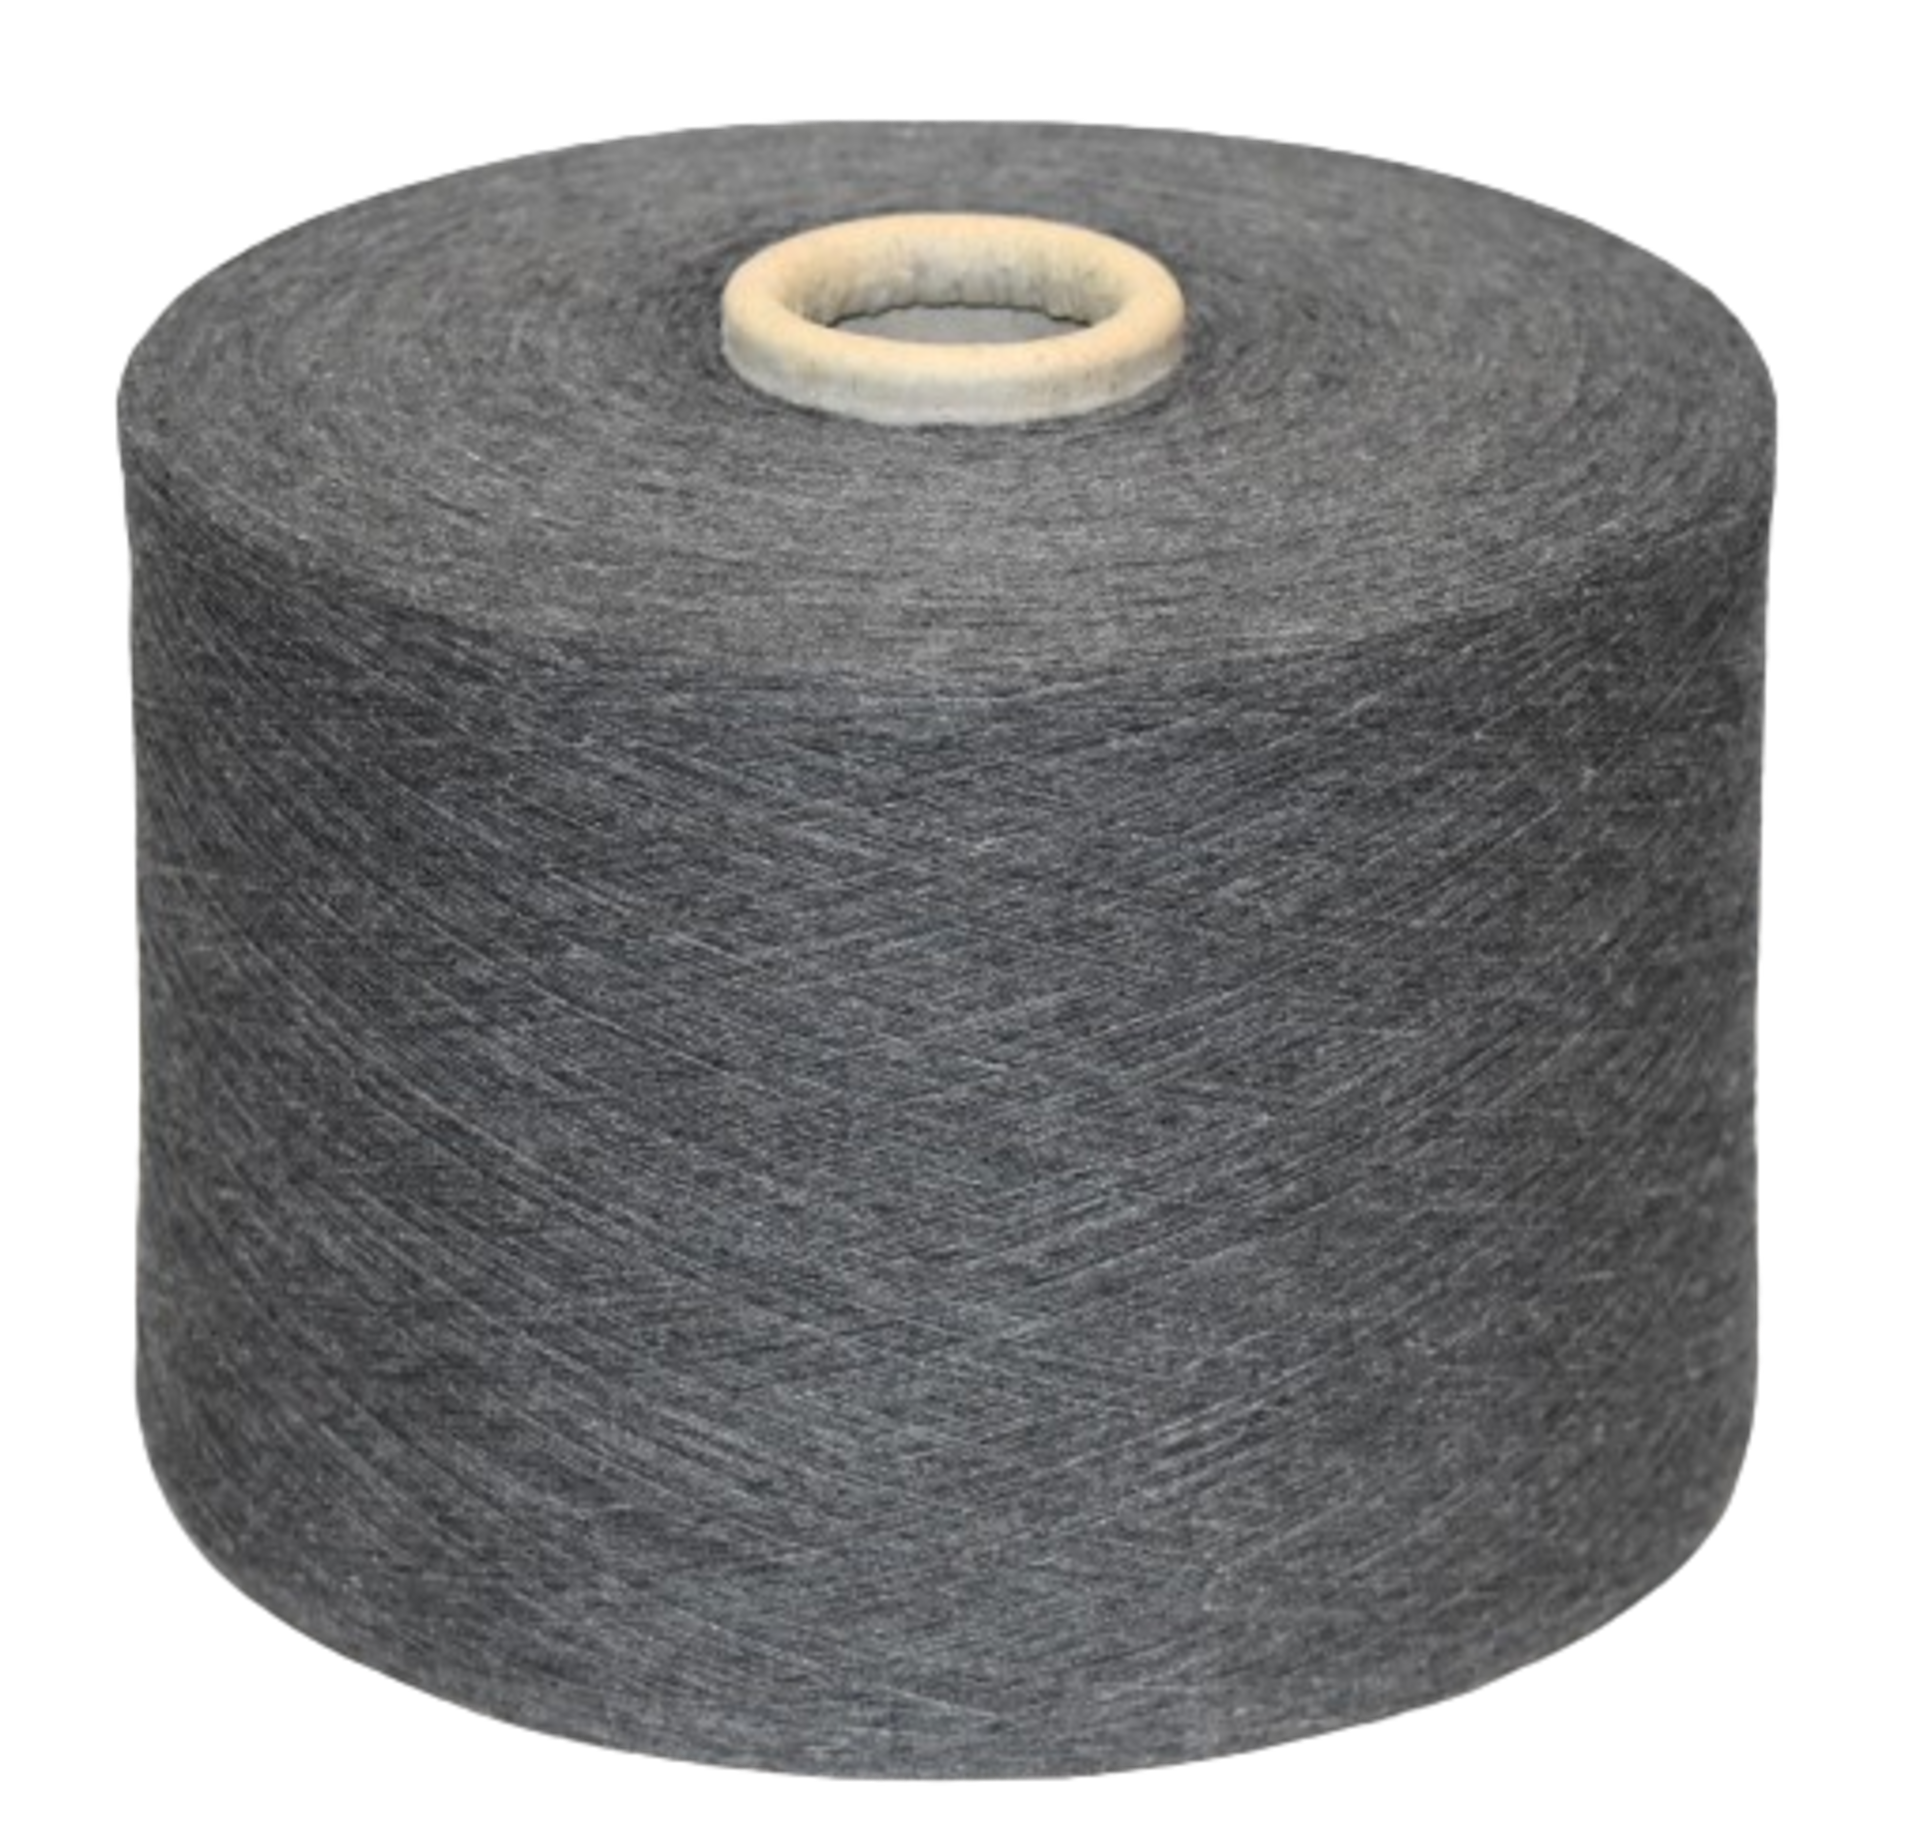 10 x Cones of 1/13 MicroCotton Knitting Yarn - Mid Grey - Approx Weight: 2,500g - New Stock ABL Yarn